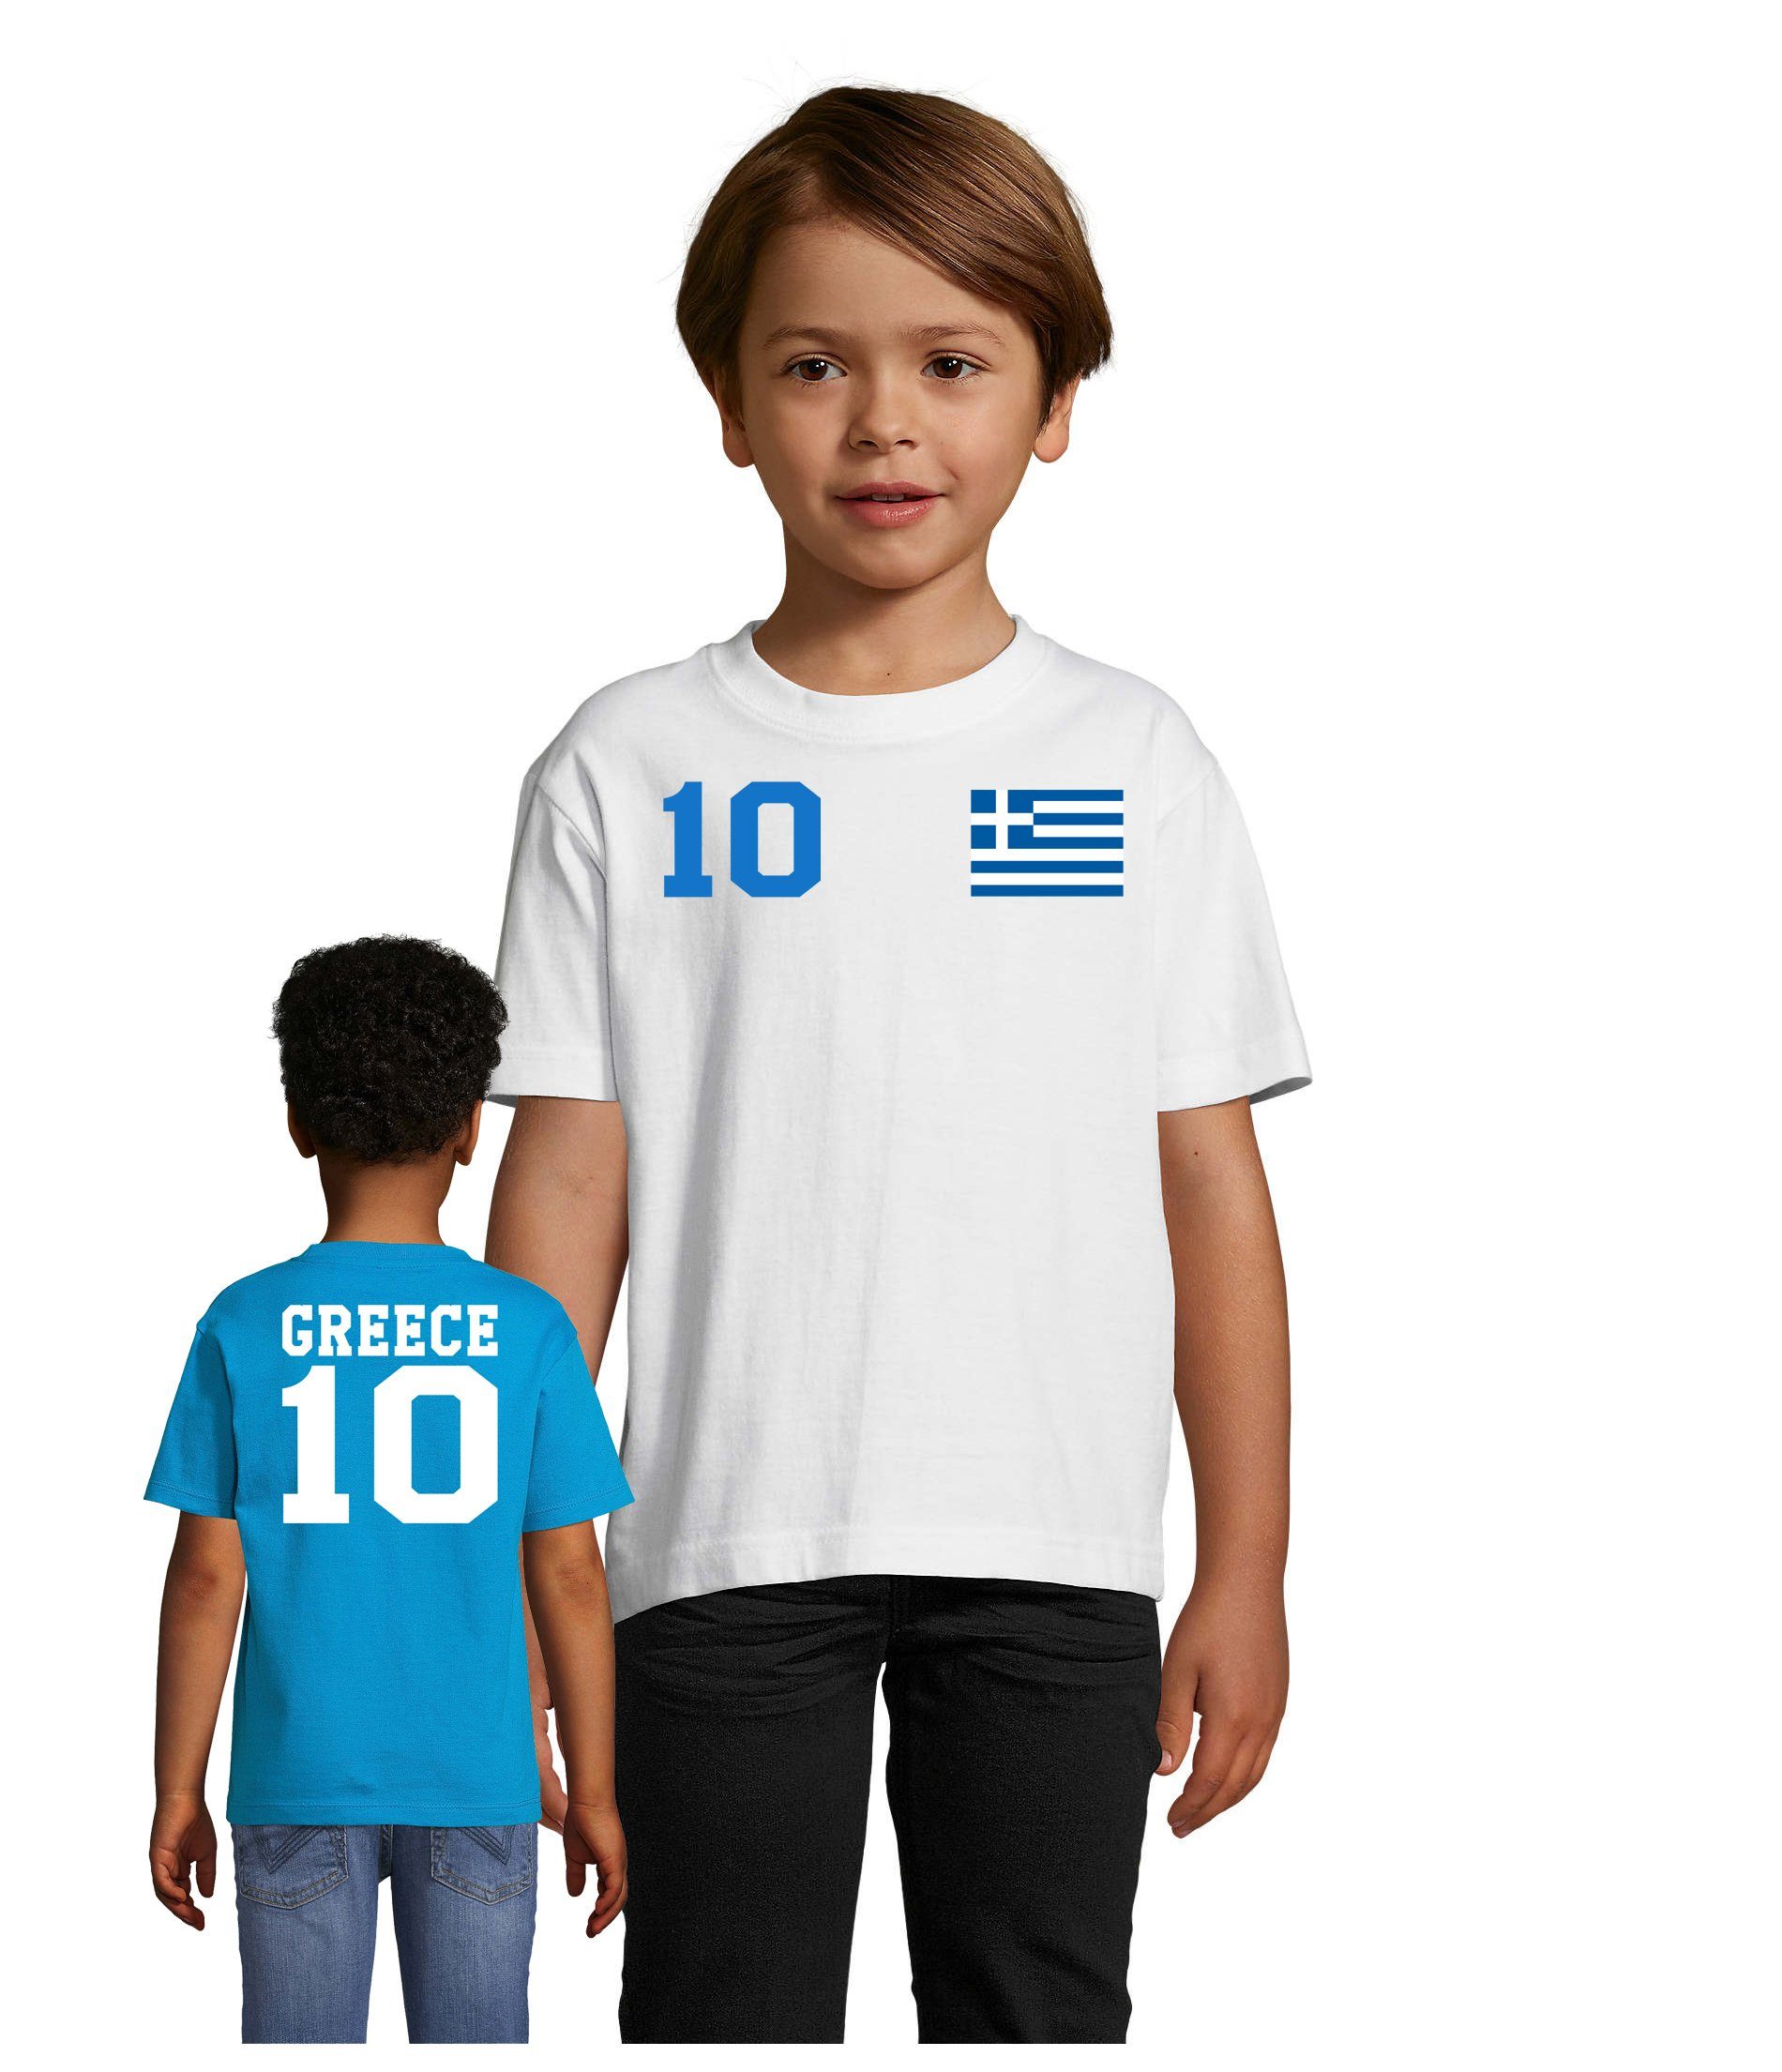 Blau/Weiss & T-Shirt Griechenland Blondie Europa Sport Brownie EM Weltmeister Fußball Kinder Trikot